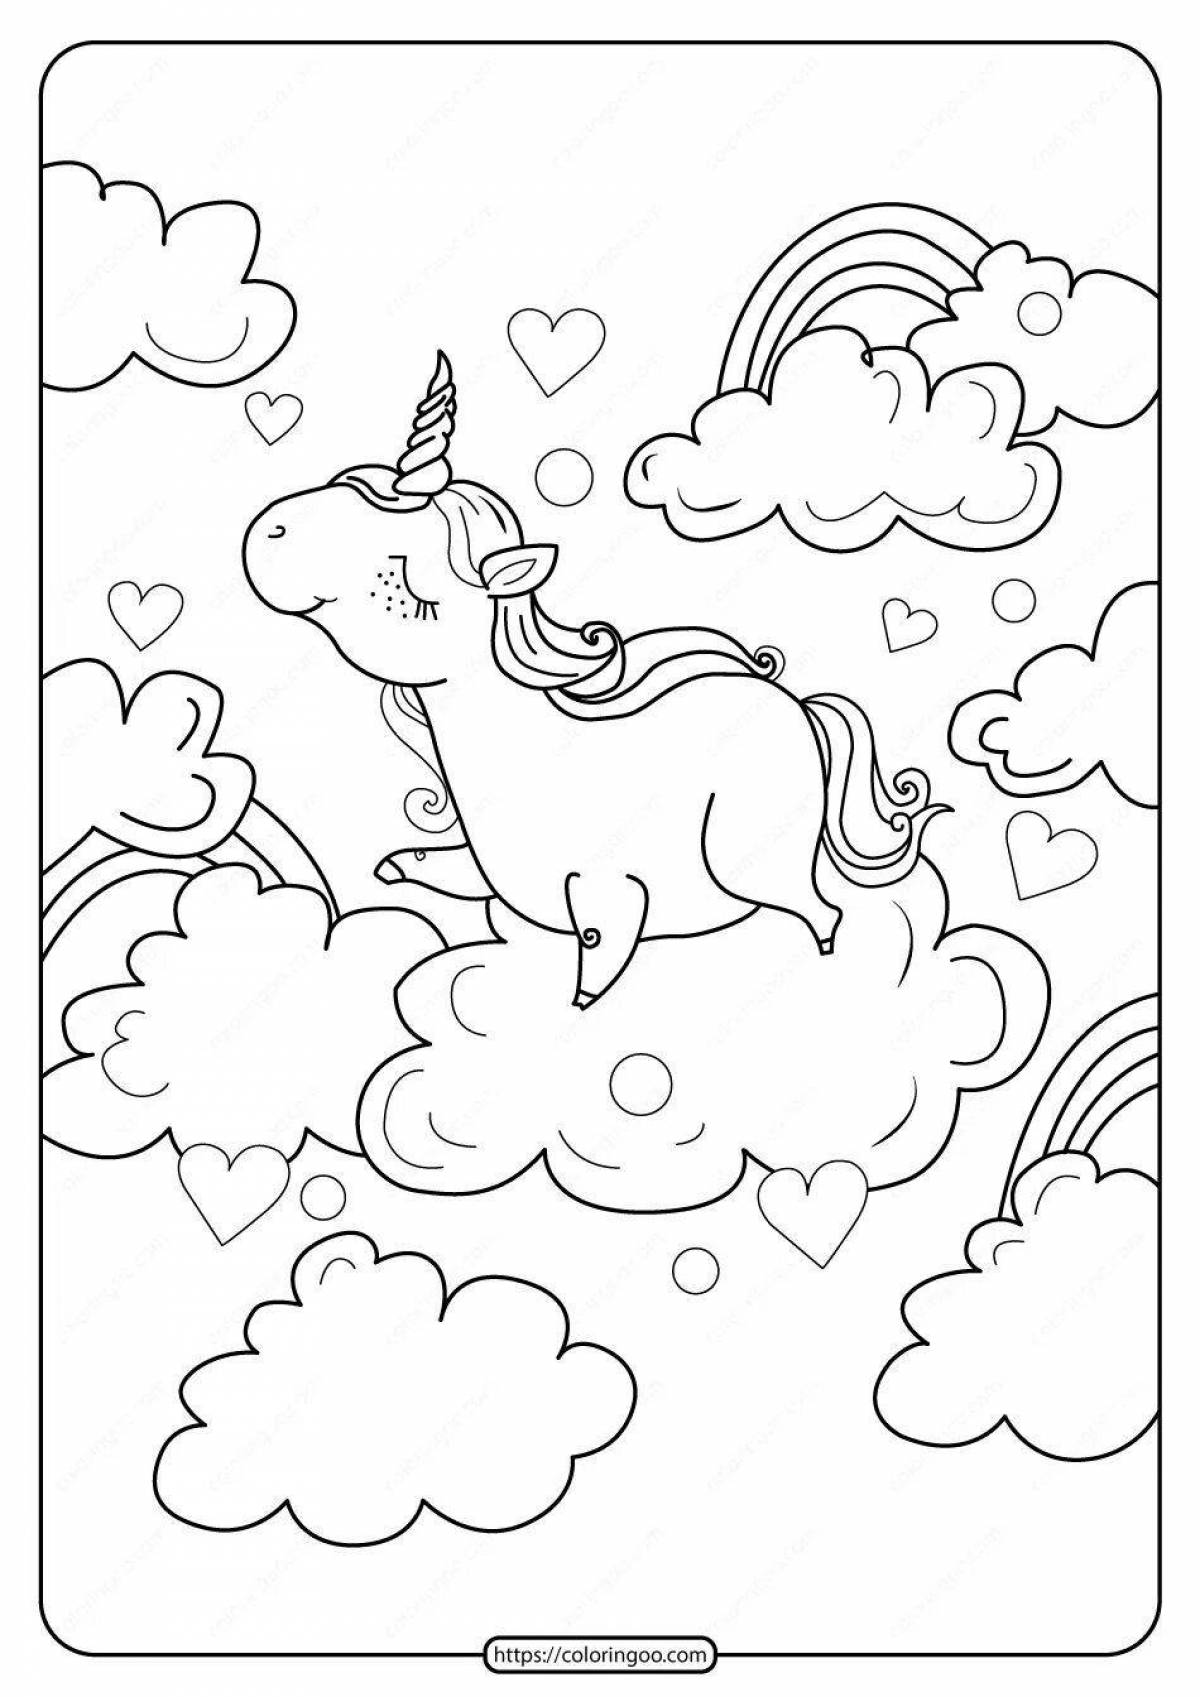 Serene coloring page rainbow unicorn